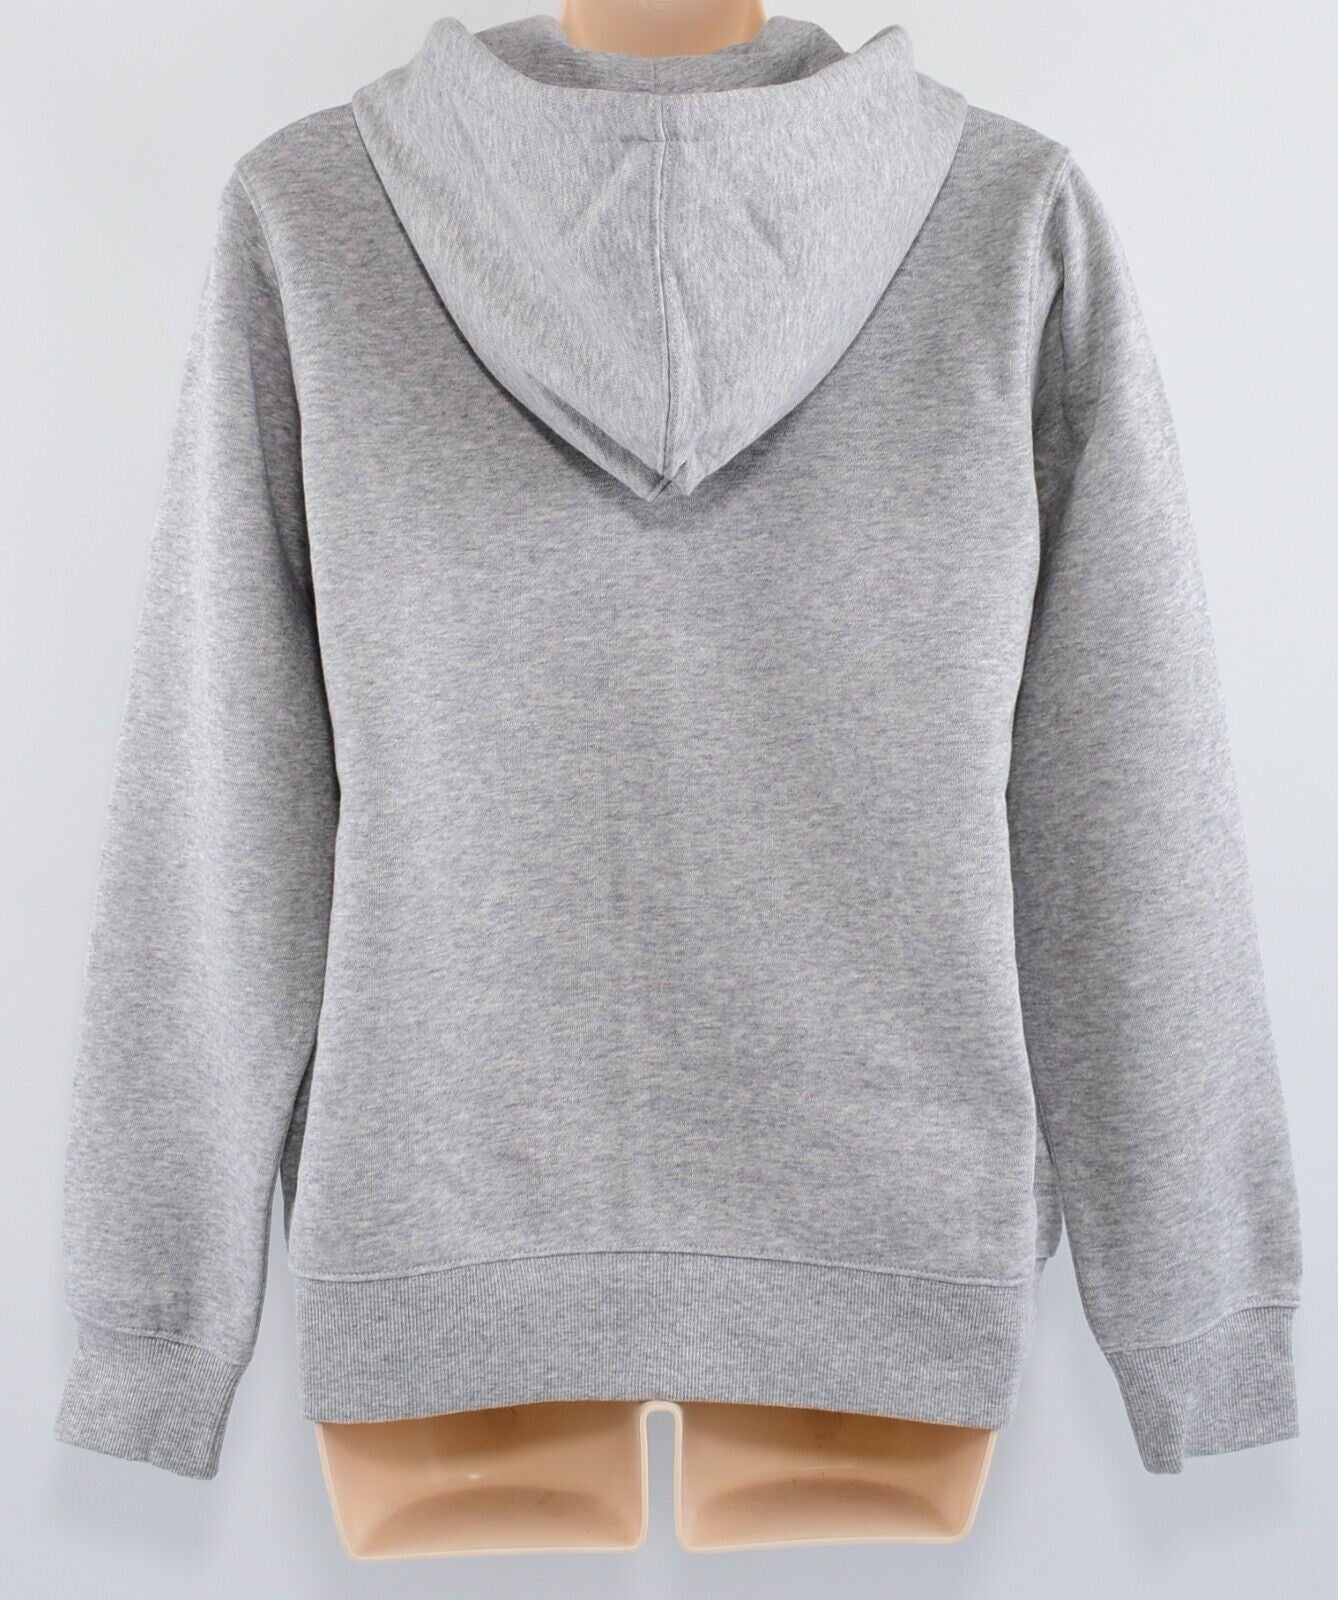 NEW BALANCE Women's Full Zip Hoodie Jacket, Grey Heather, size S (UK 10)